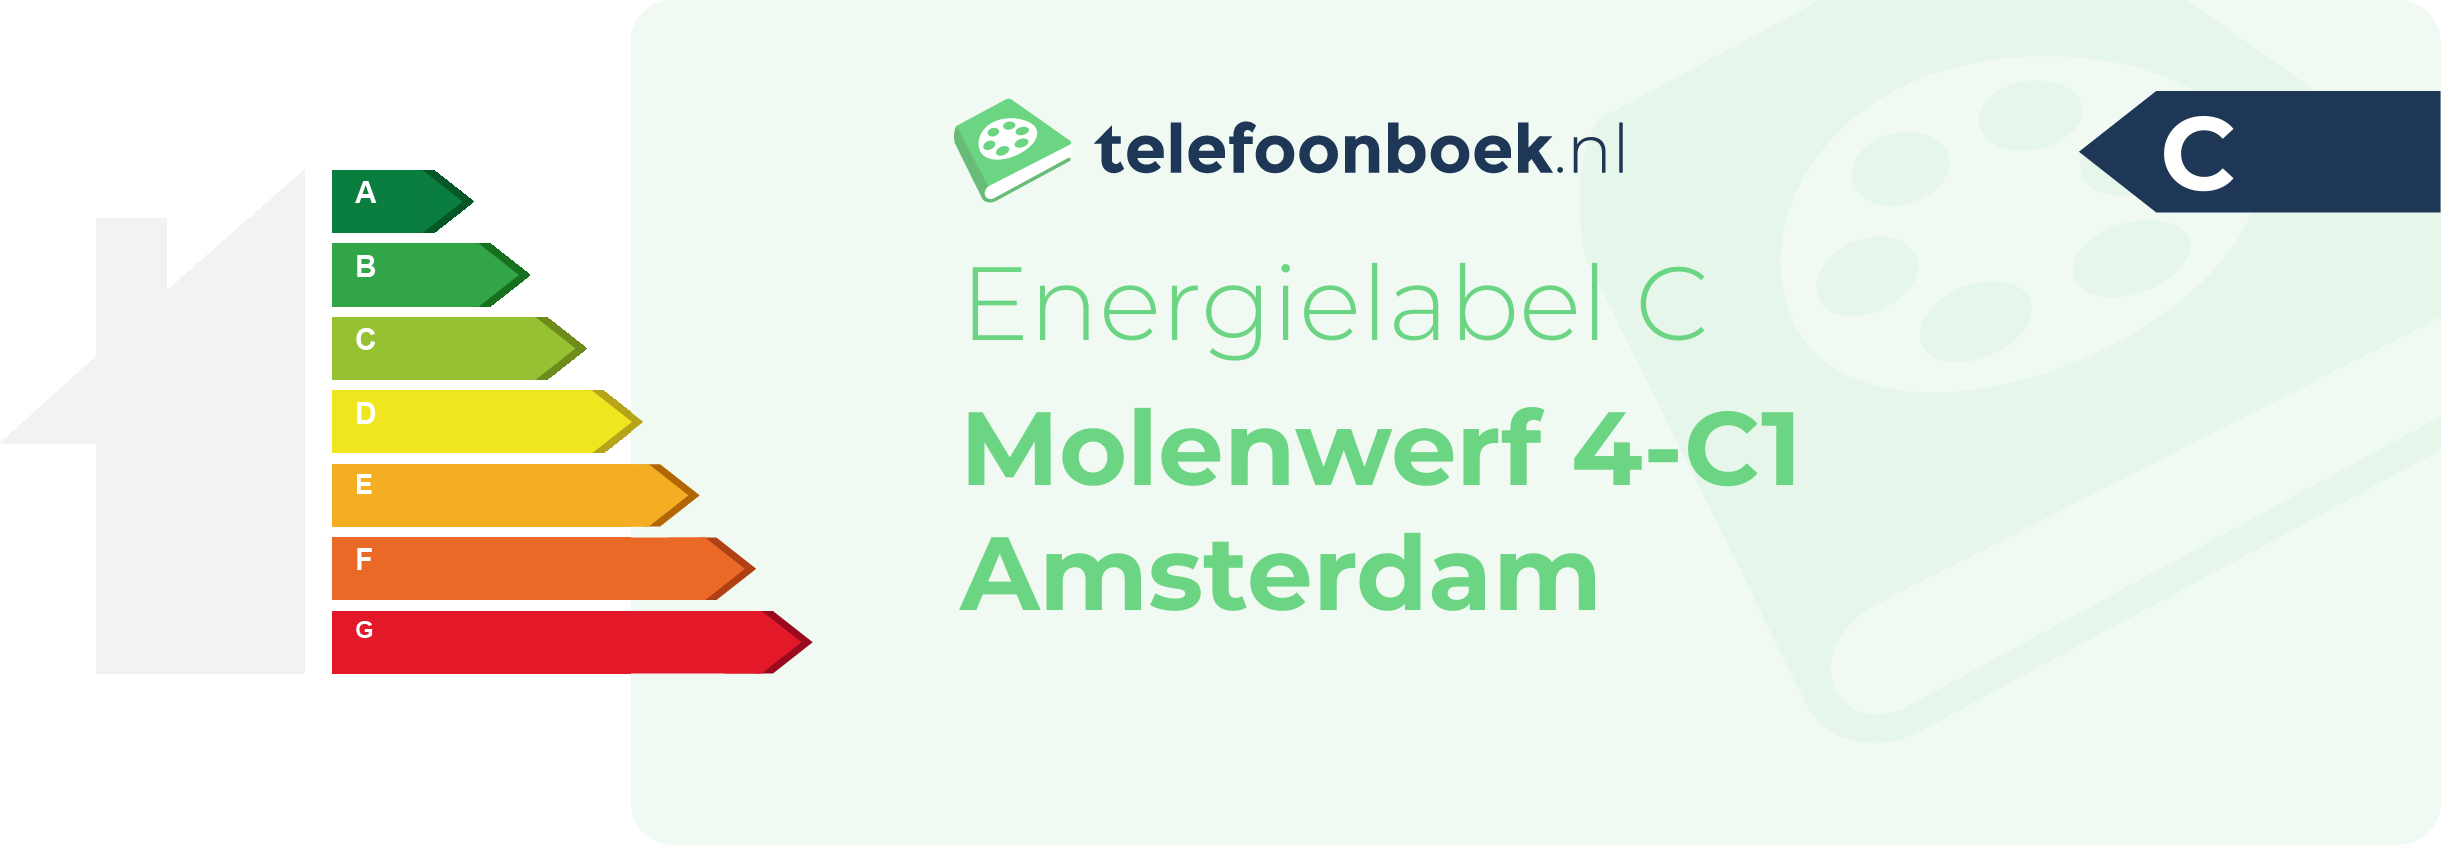 Energielabel Molenwerf 4-C1 Amsterdam